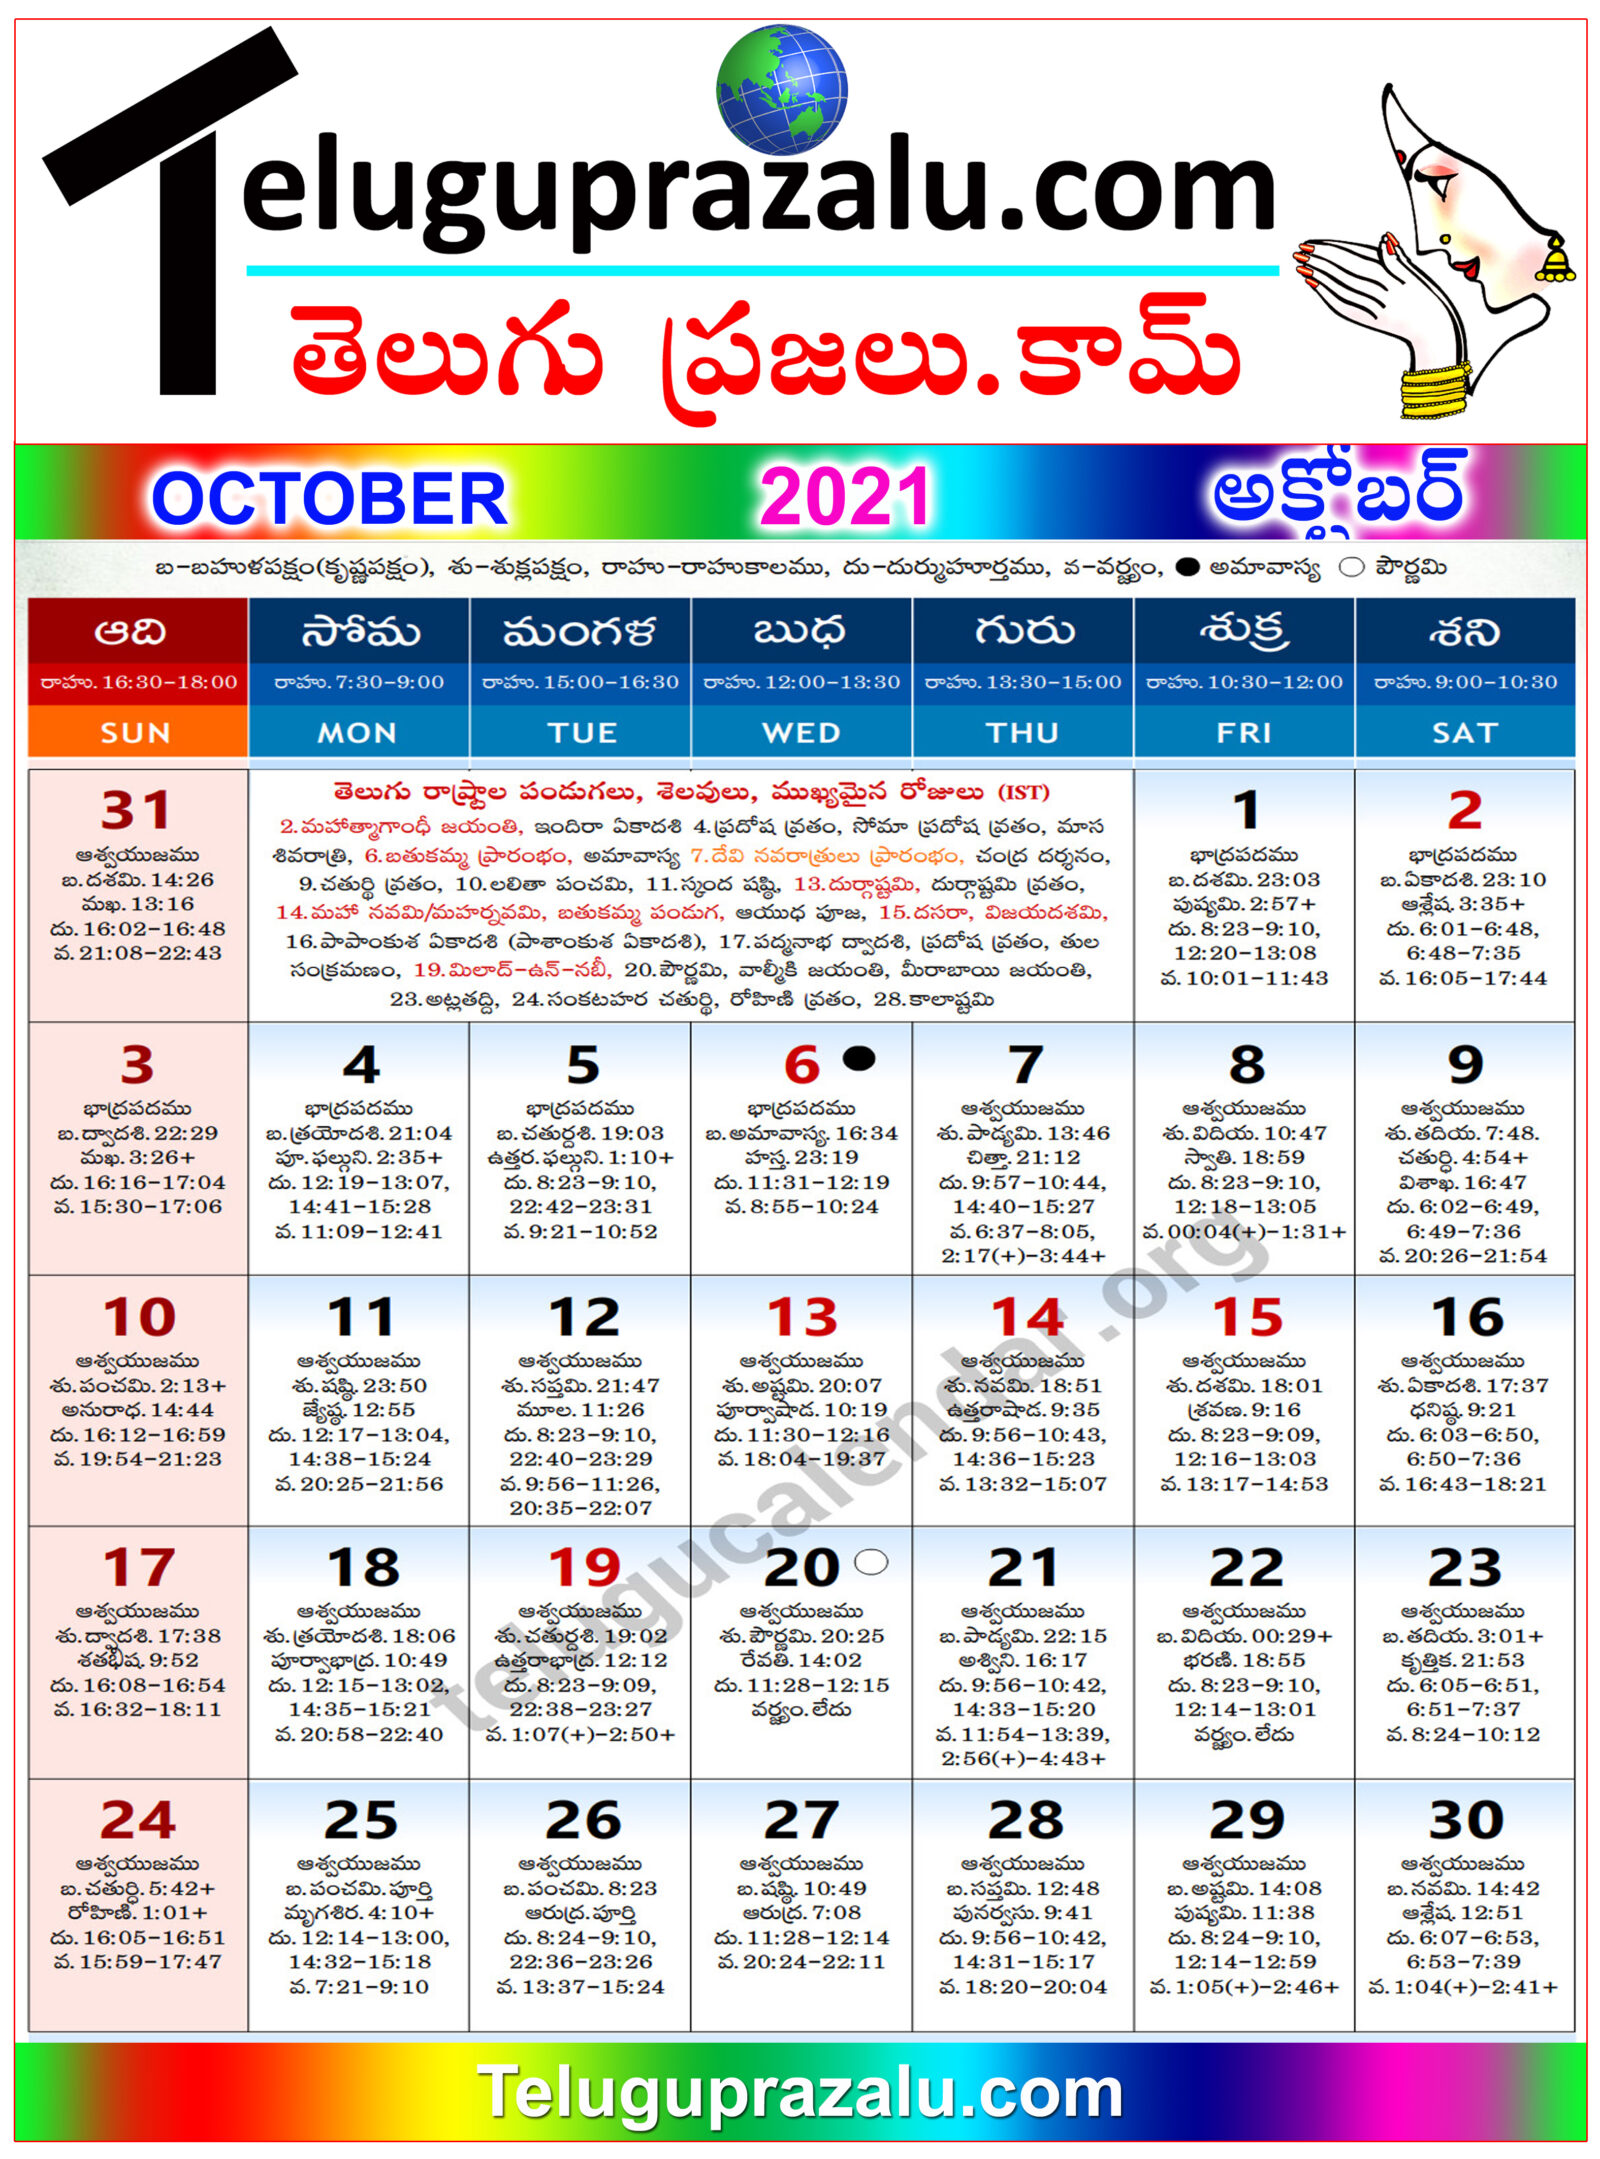 Telugu Calendar 2021 October Telugu News, Movies and More